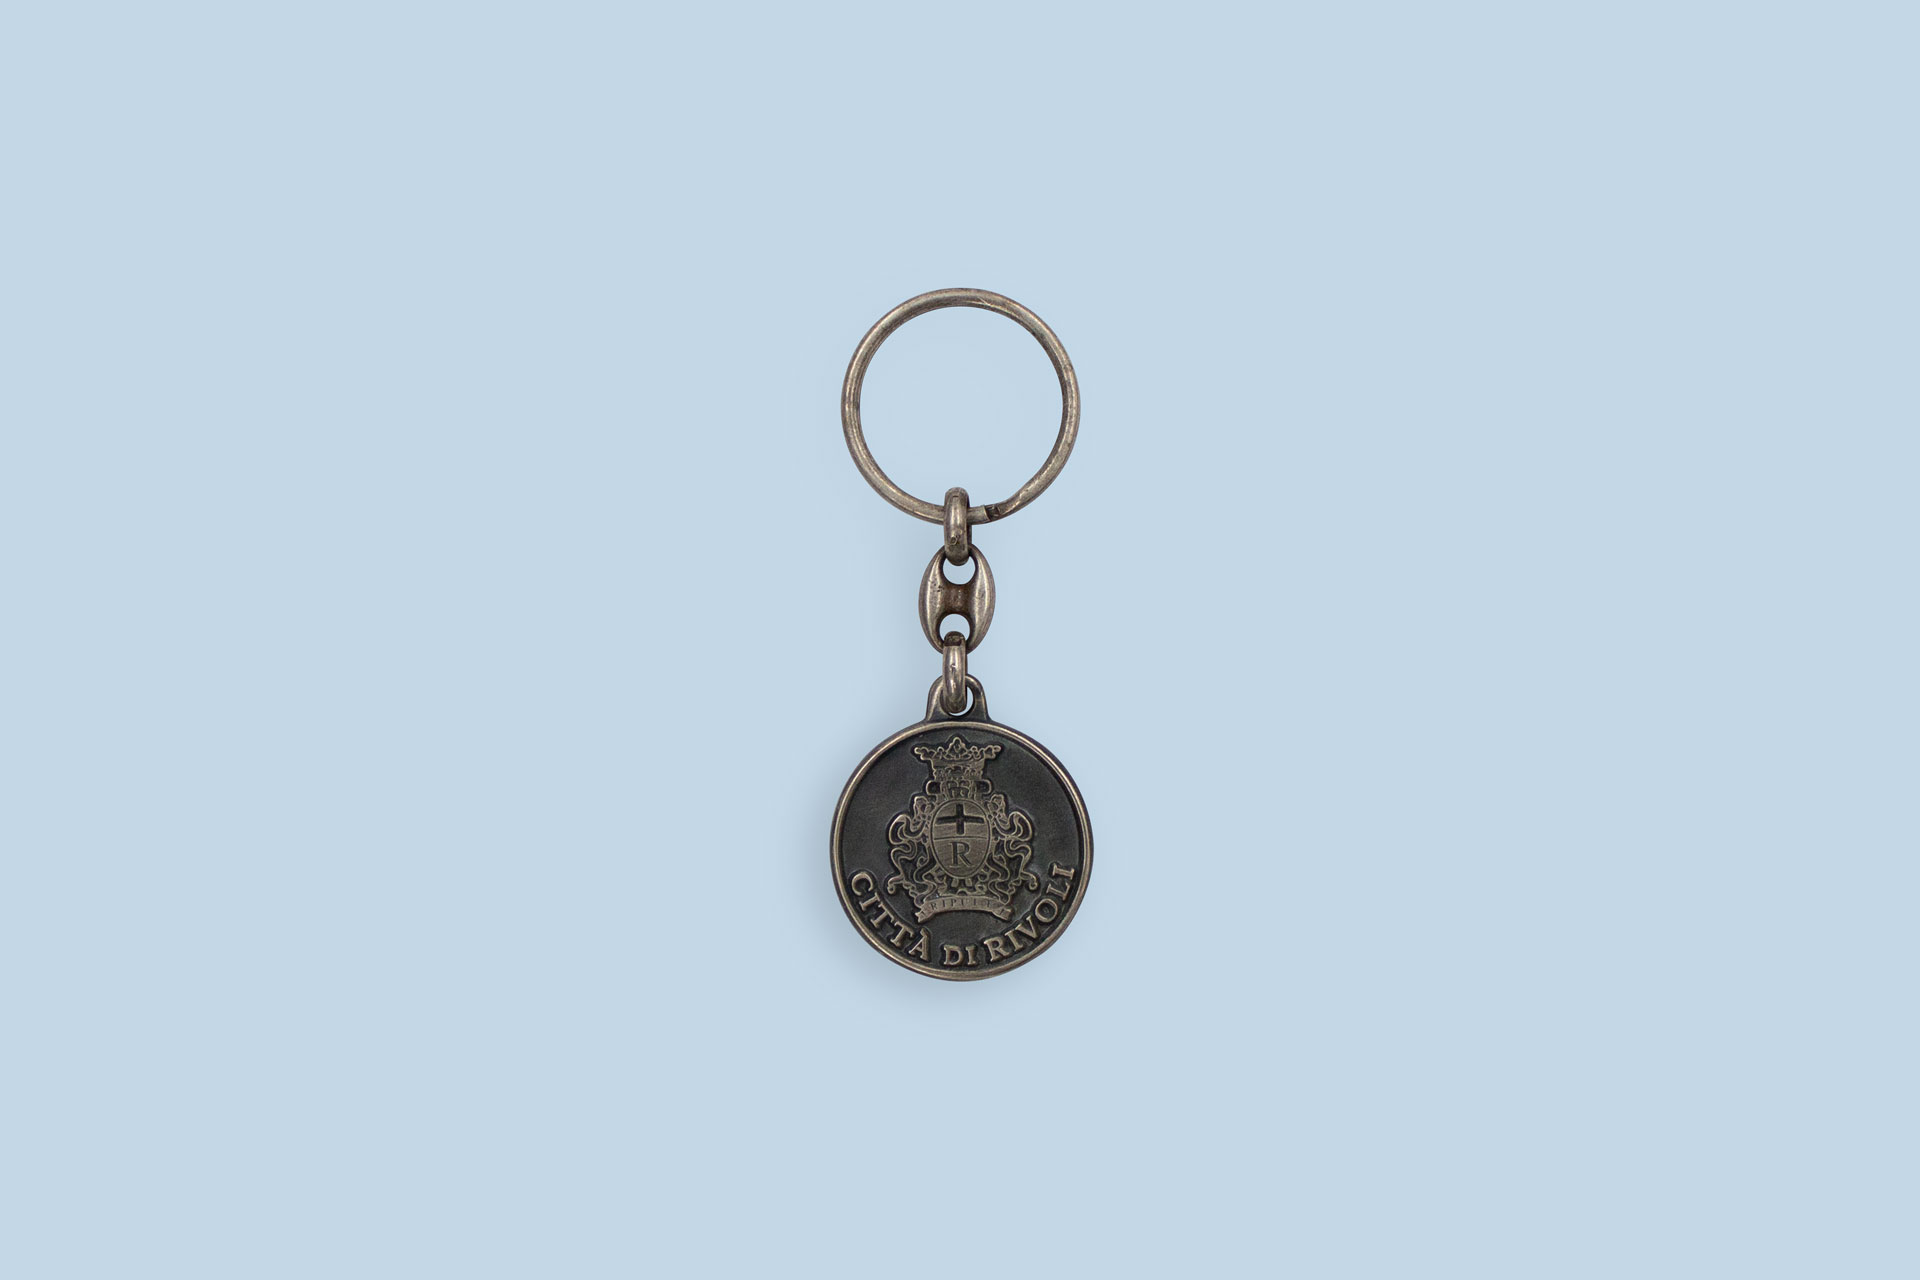 Antiqued argent plated enamel Keychain